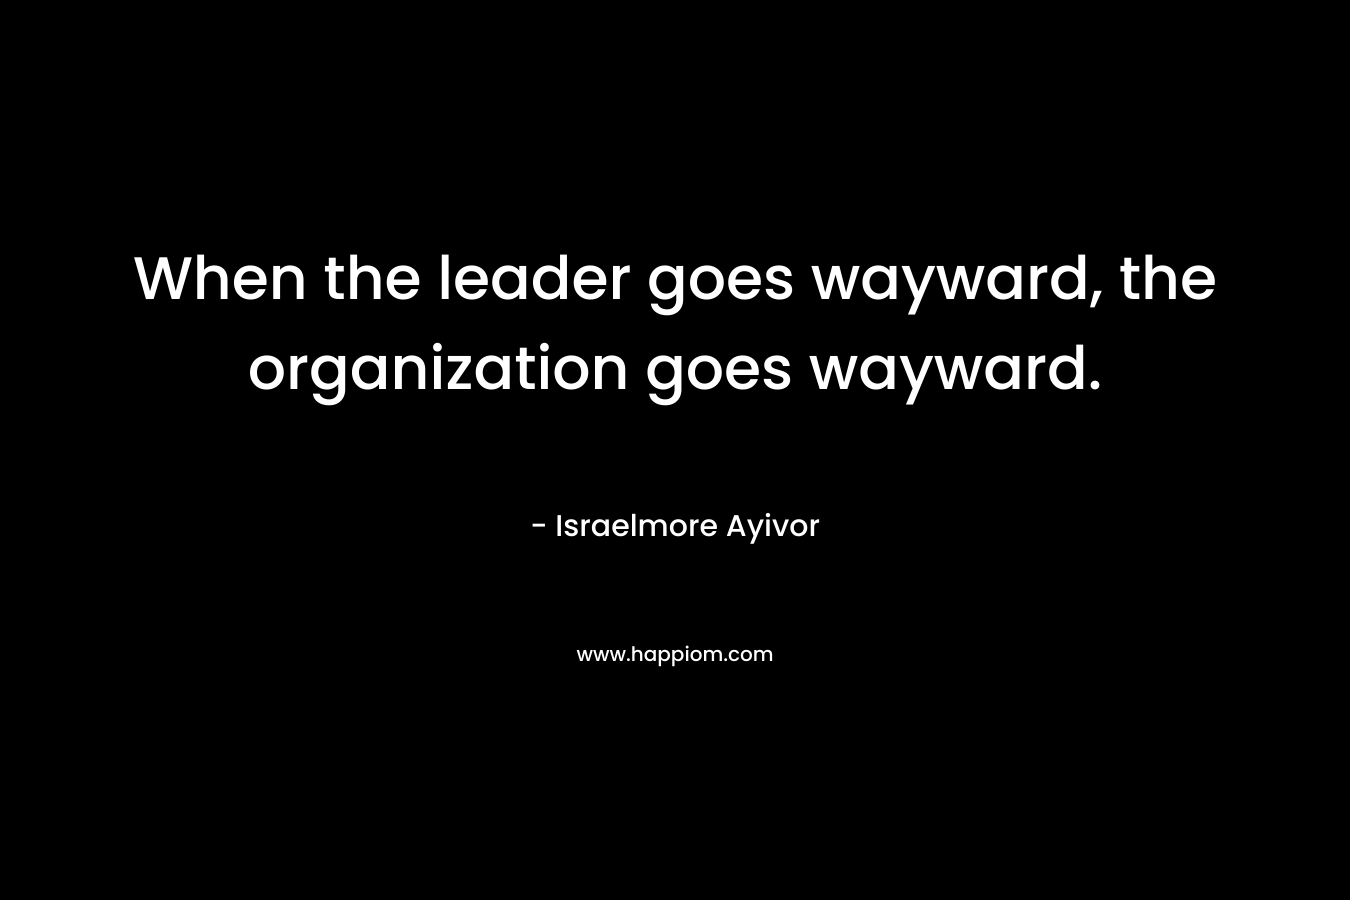 When the leader goes wayward, the organization goes wayward.